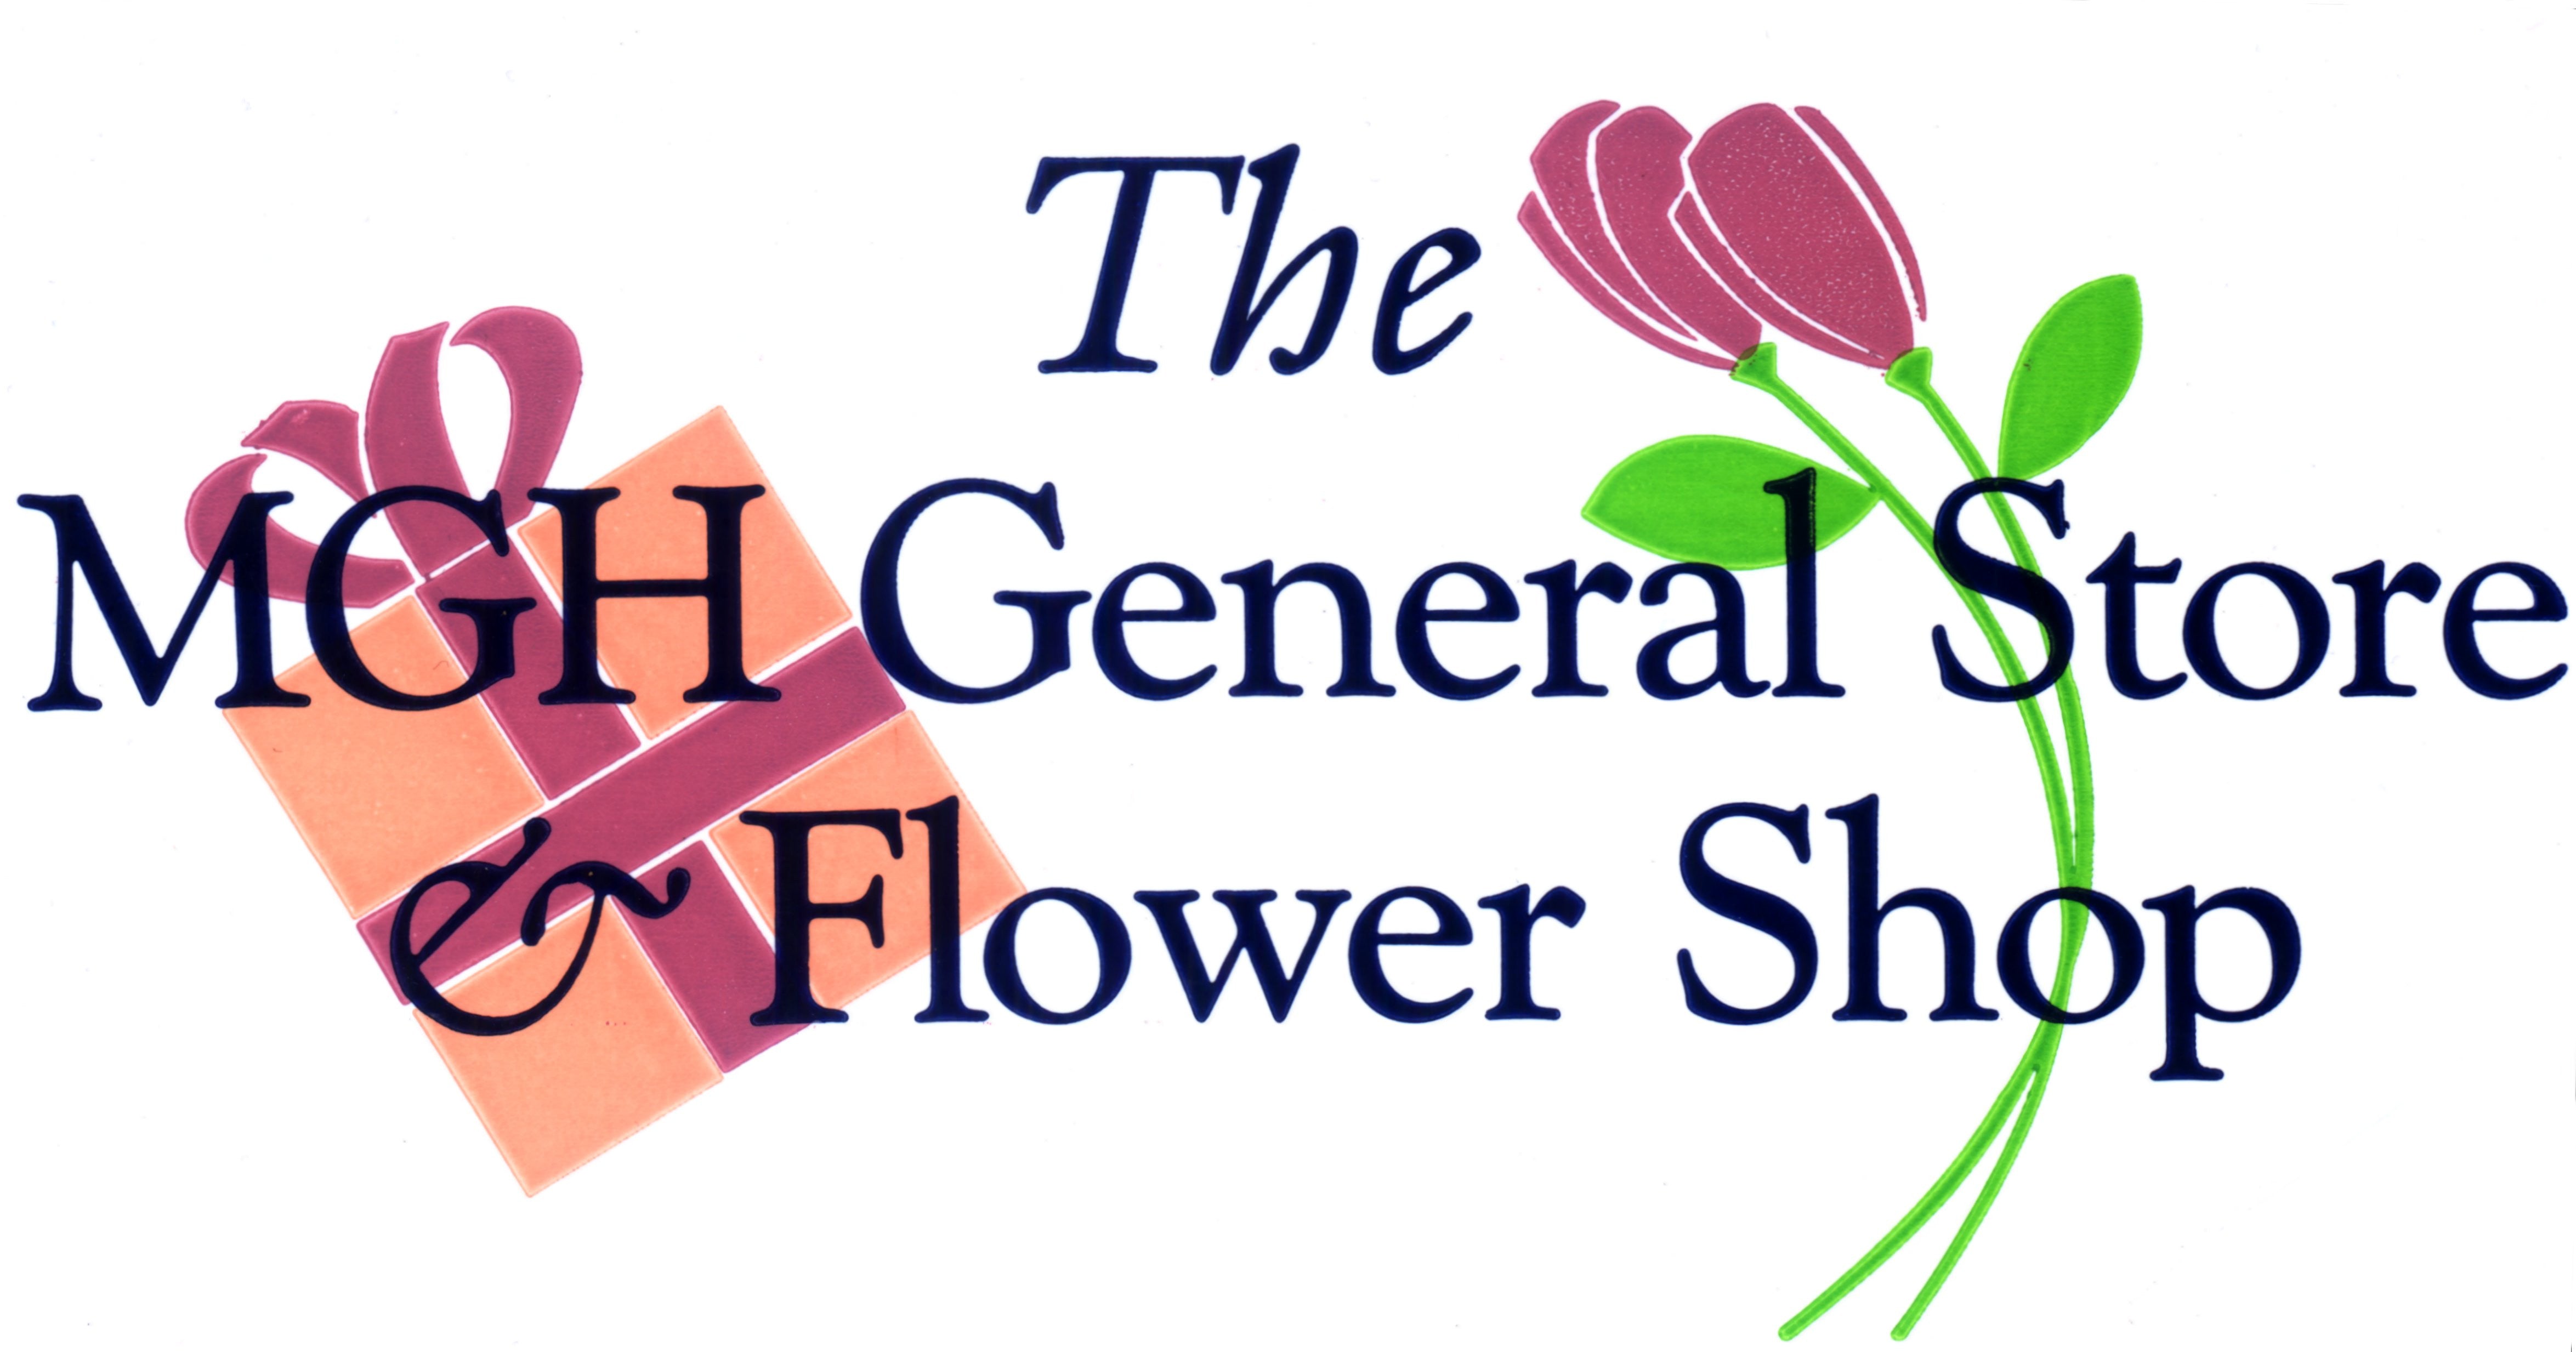 MGH General Store & Flower Shop